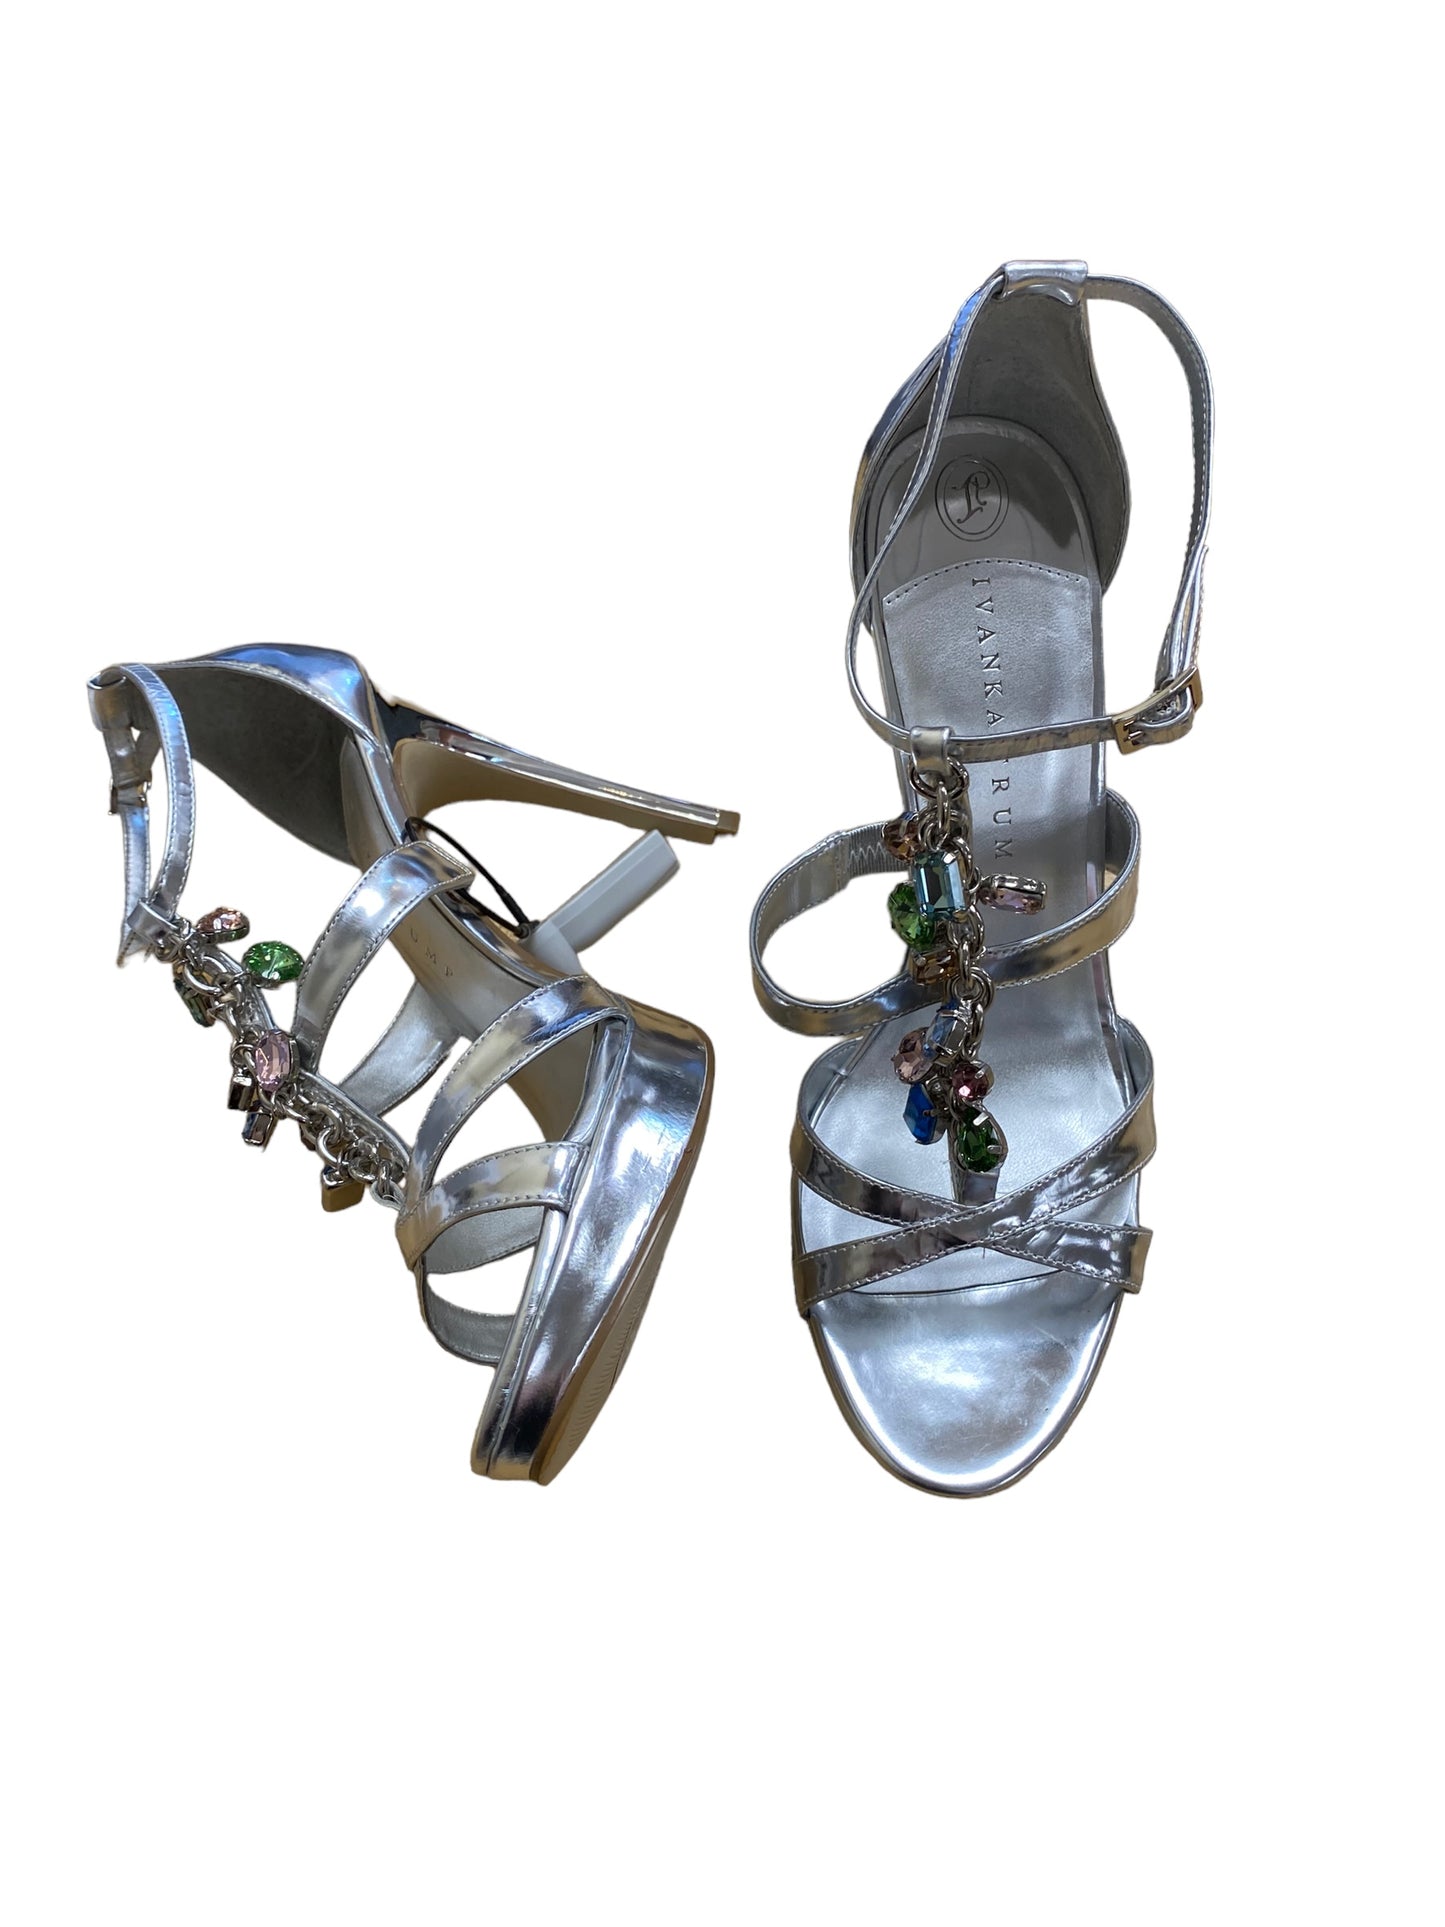 Shoes Heels Stiletto By Ivanka Trump  Size: 8.5